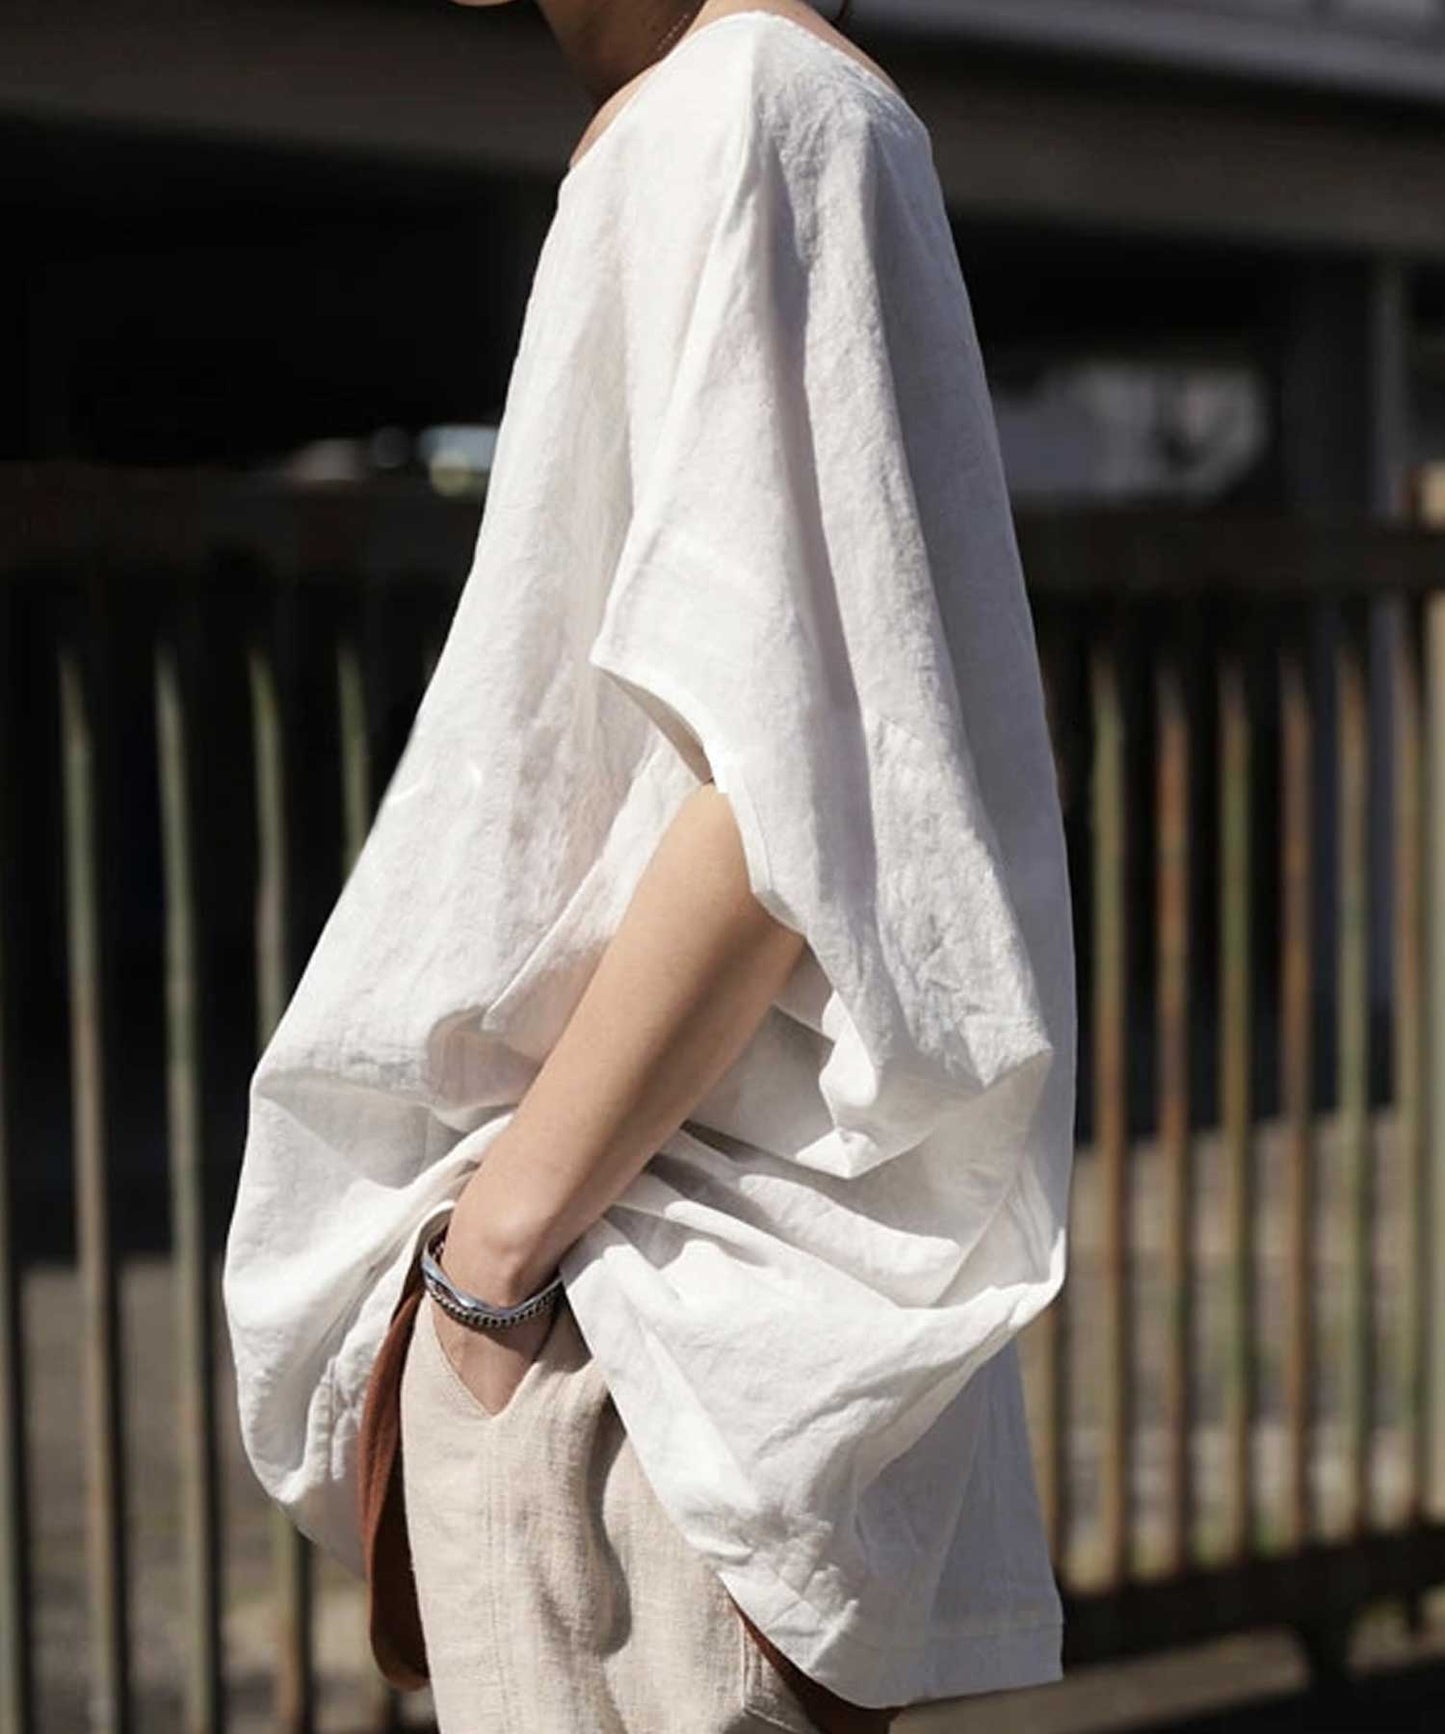 Cotton linen short-sleeve dolman tops Ladies tops Plain